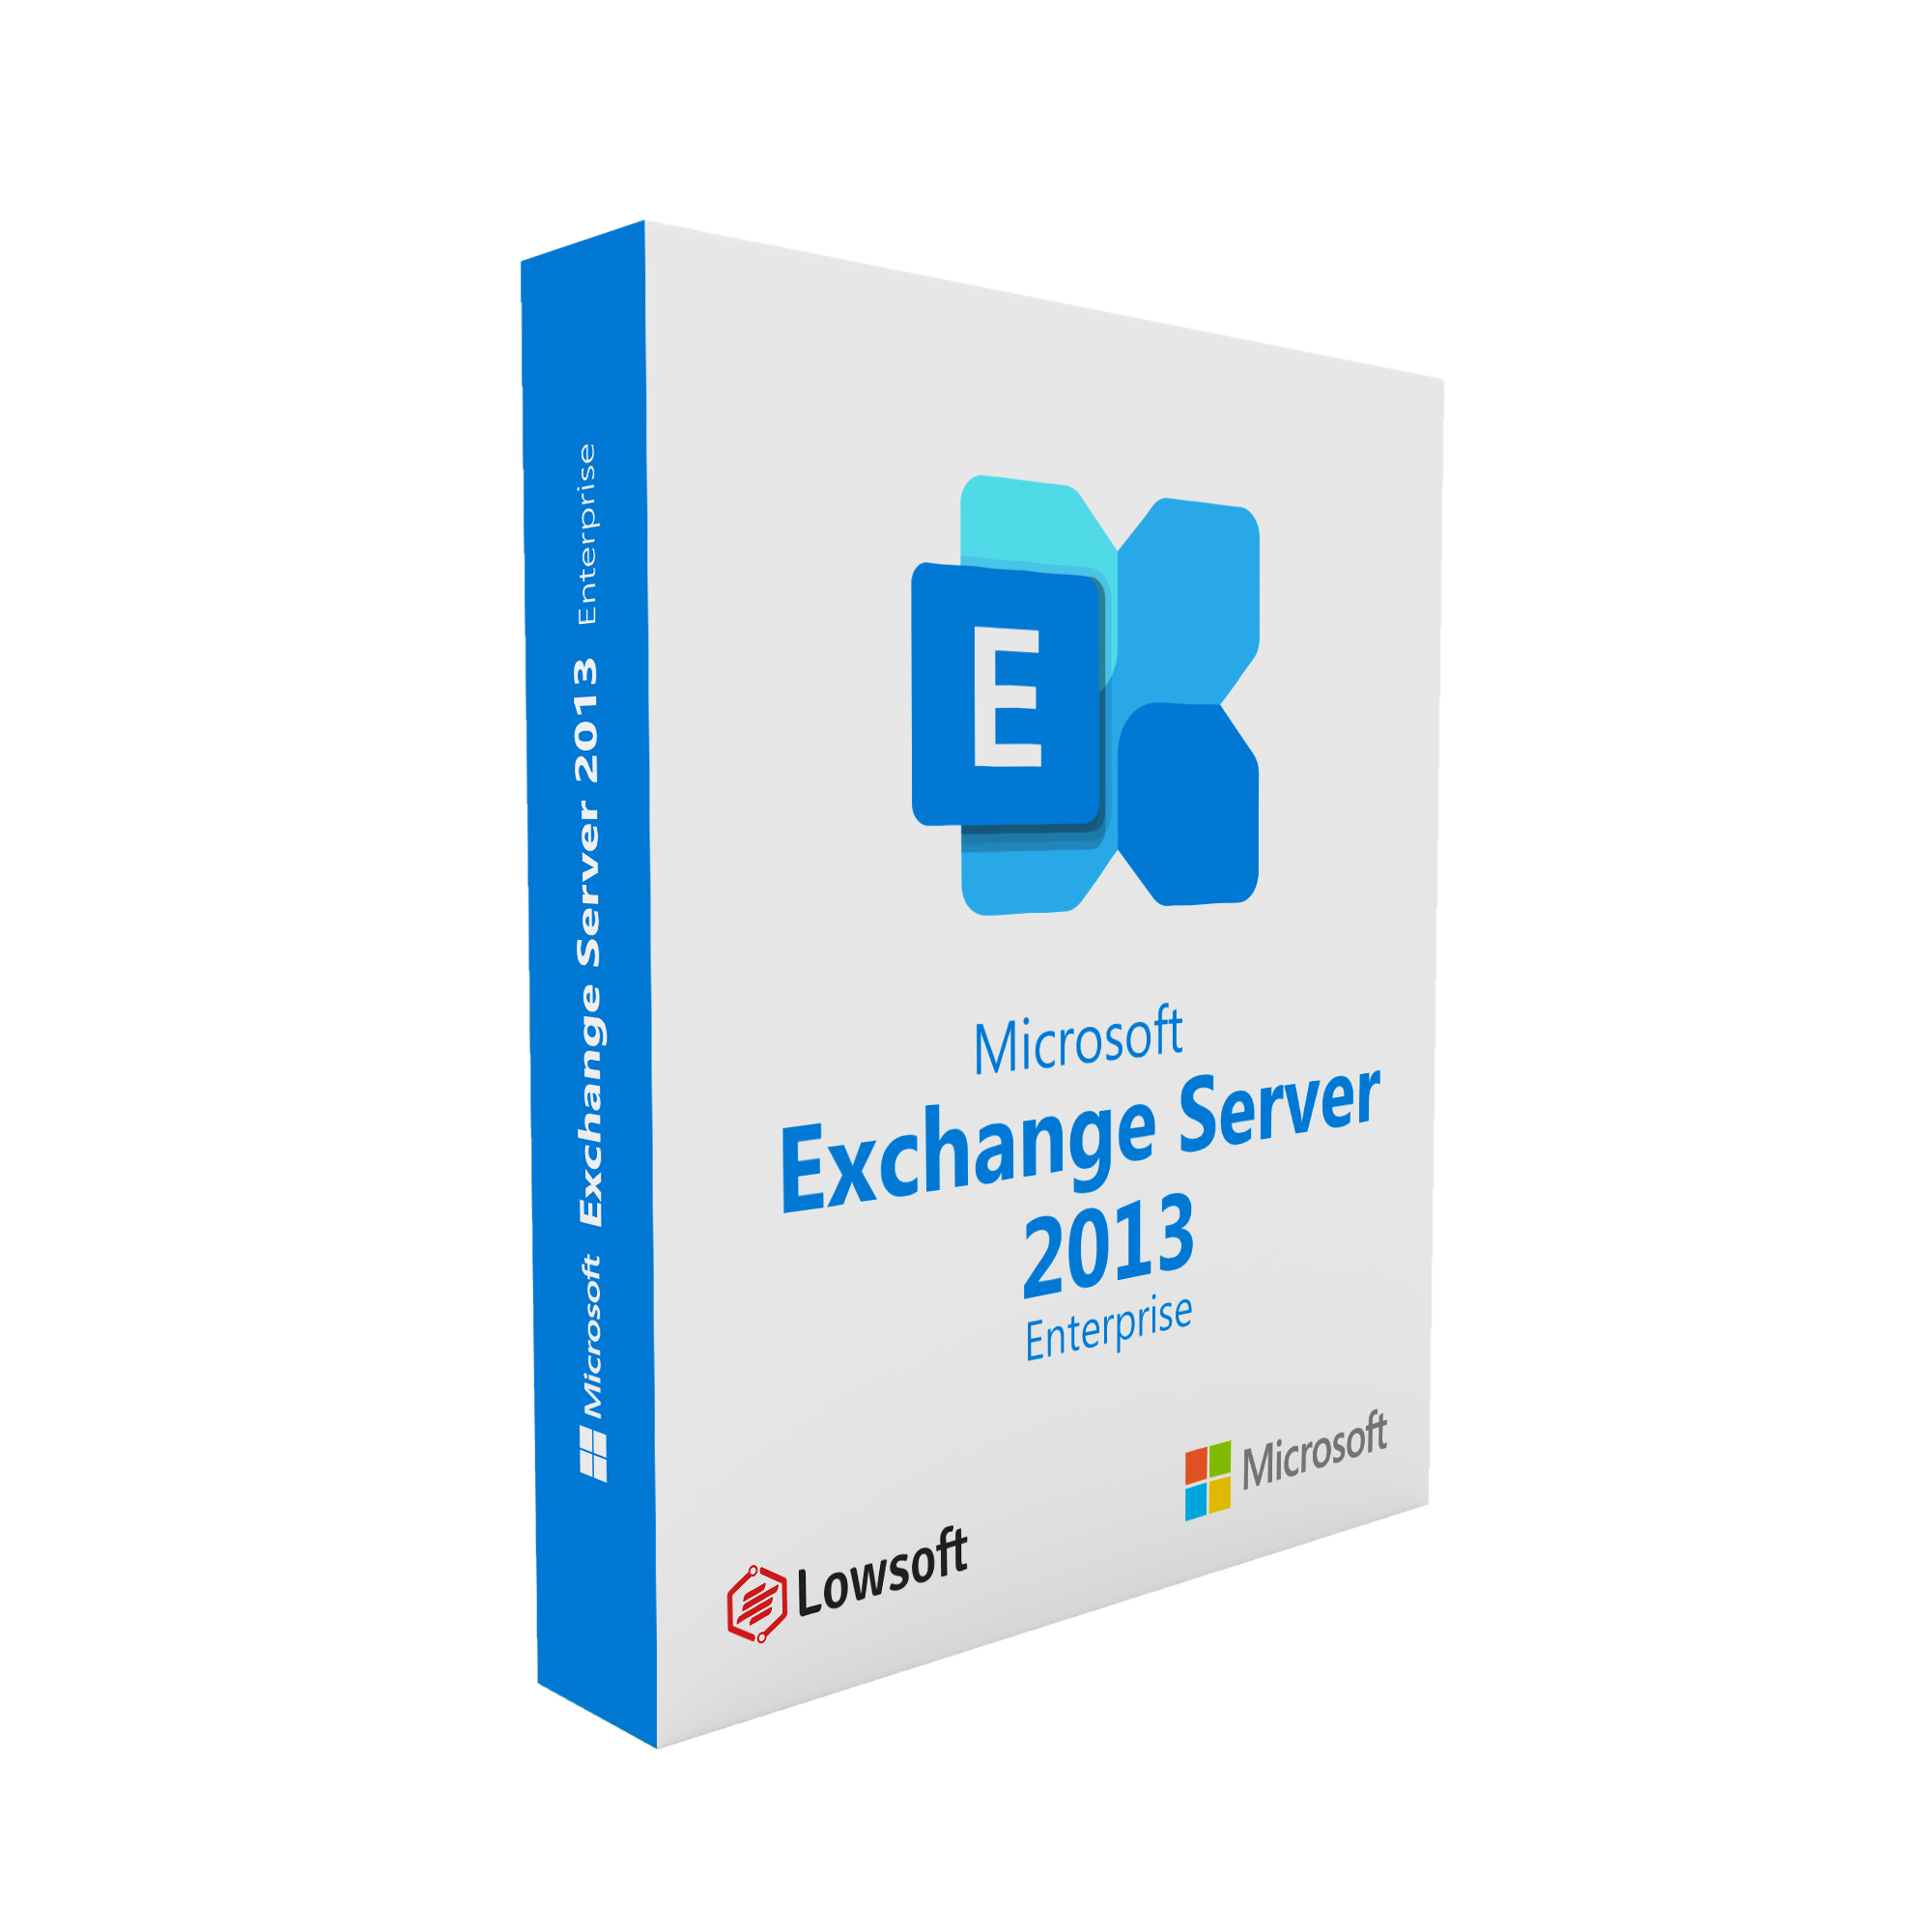 Exchange Server 2013 Enterprise